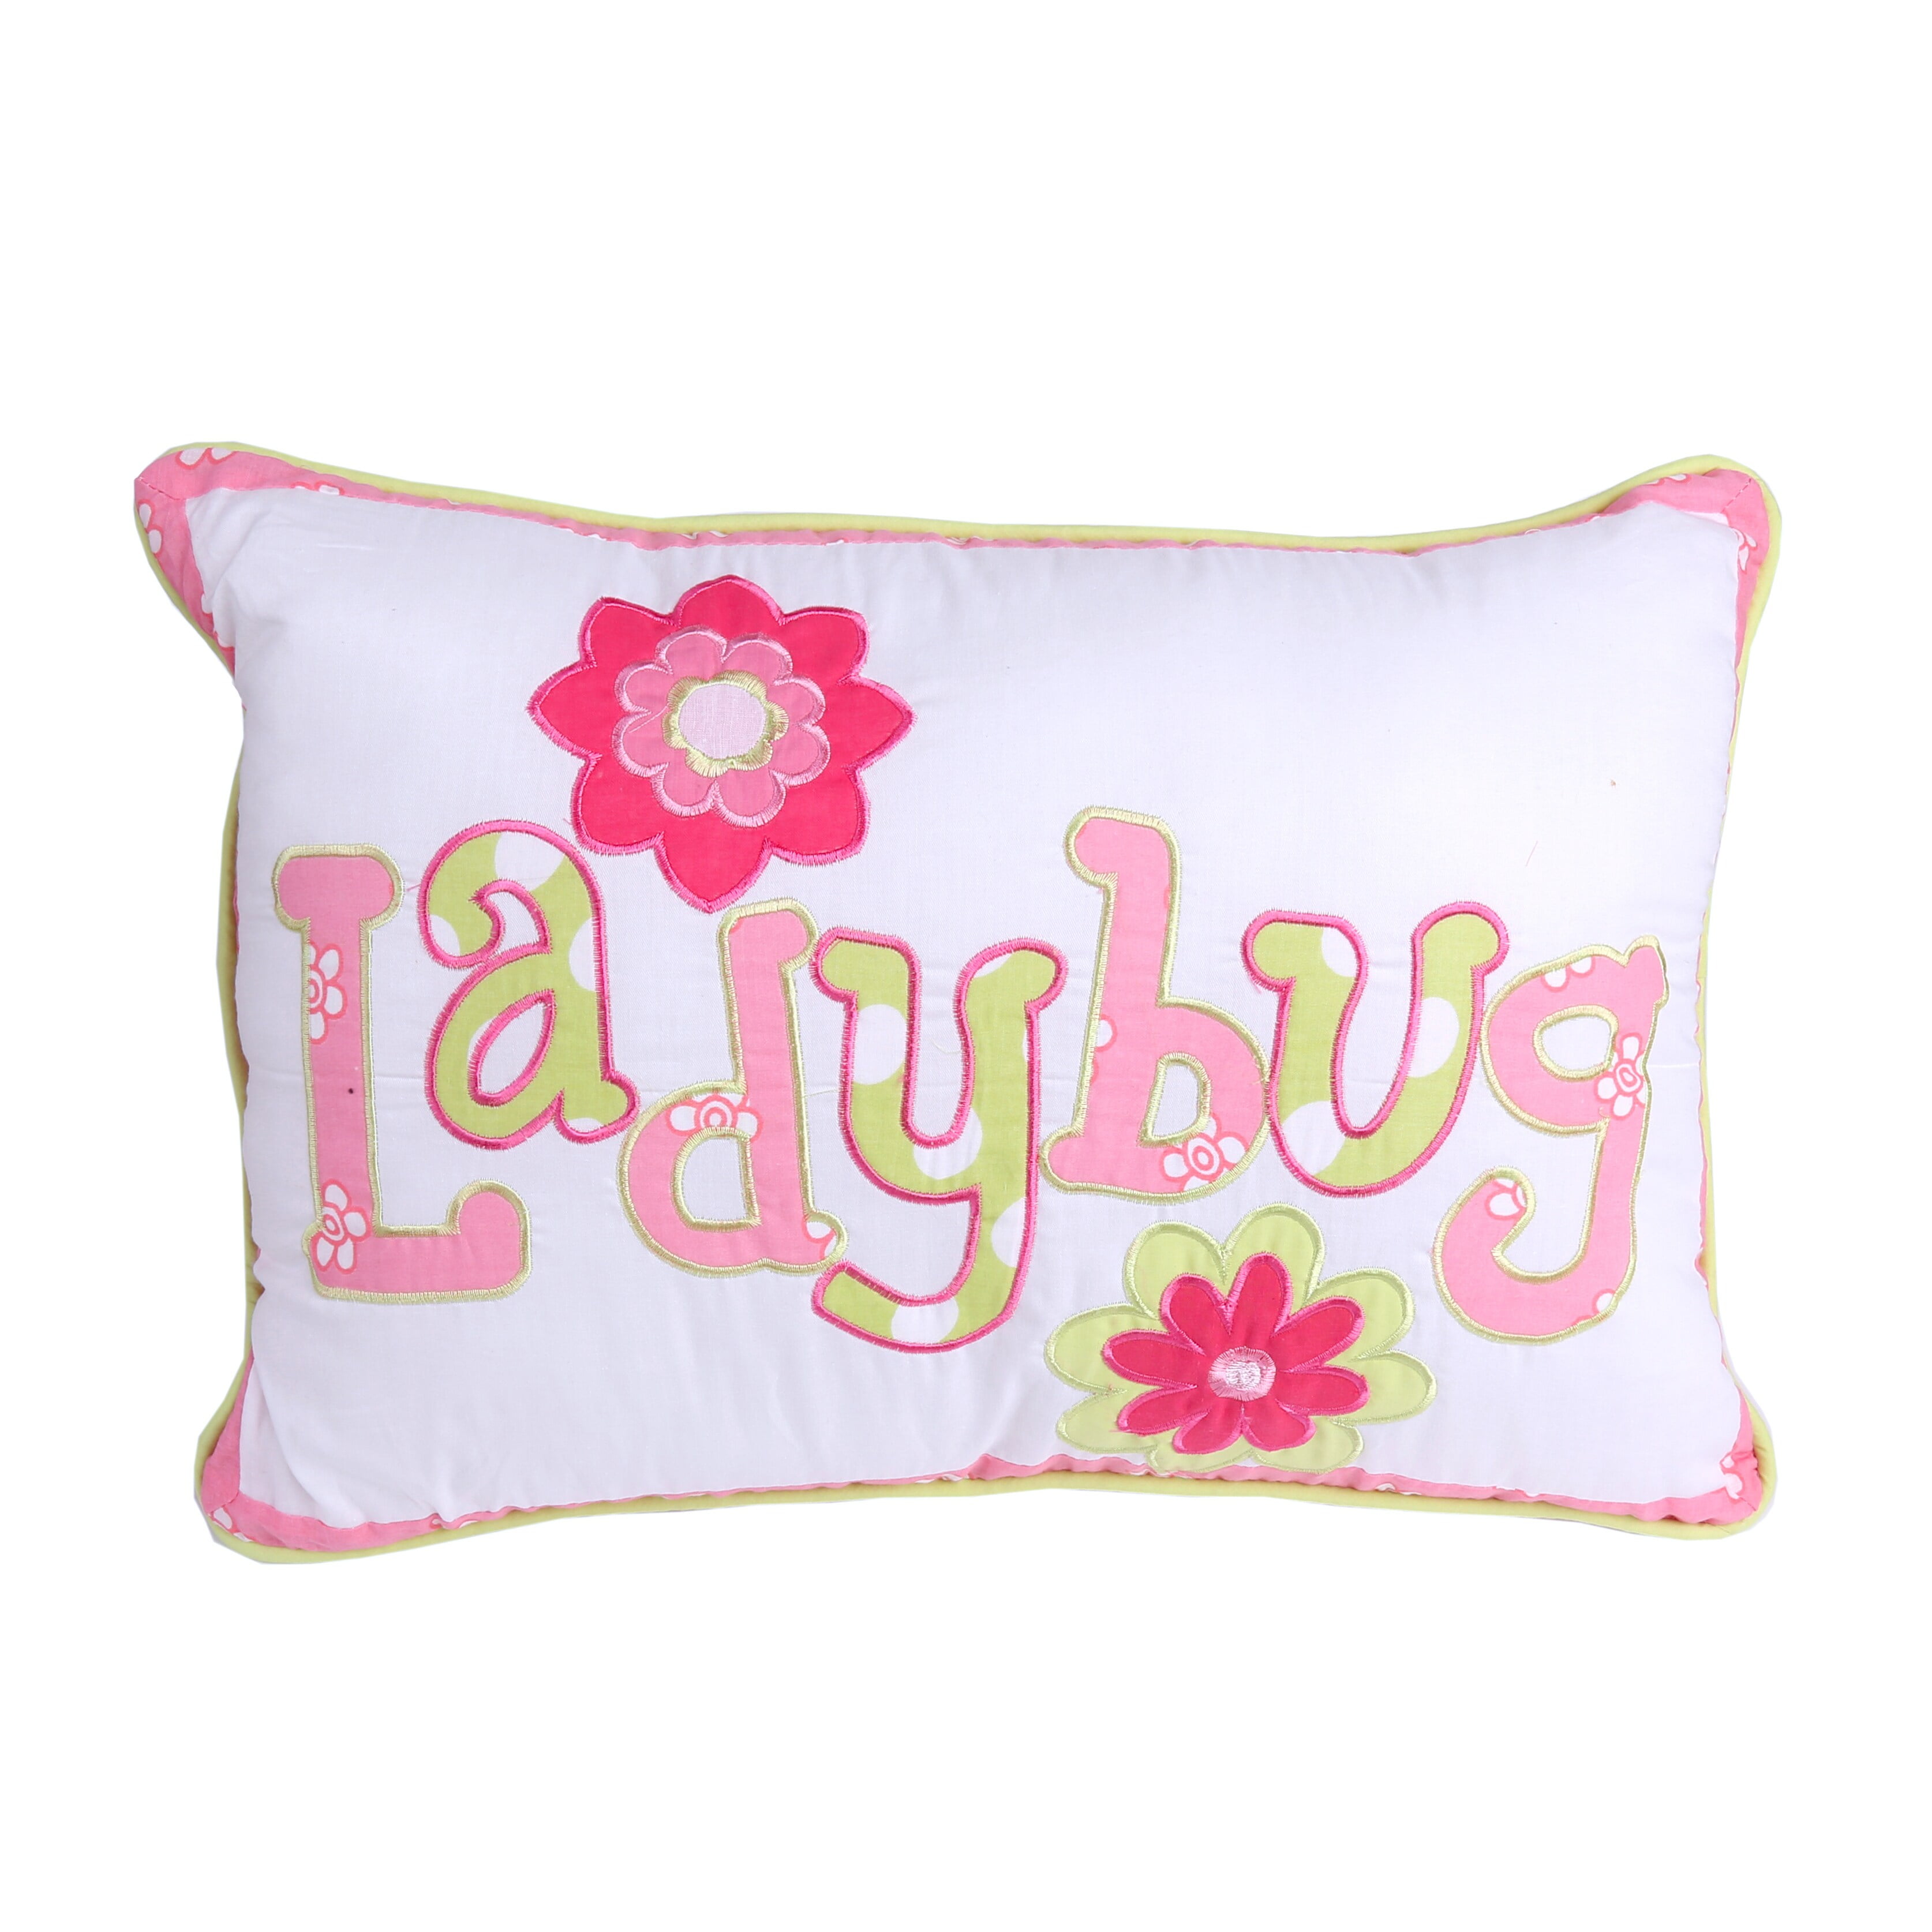 Cozy Line Home Fahsions Pink Ladybug Throw Pillow - Walmart.com